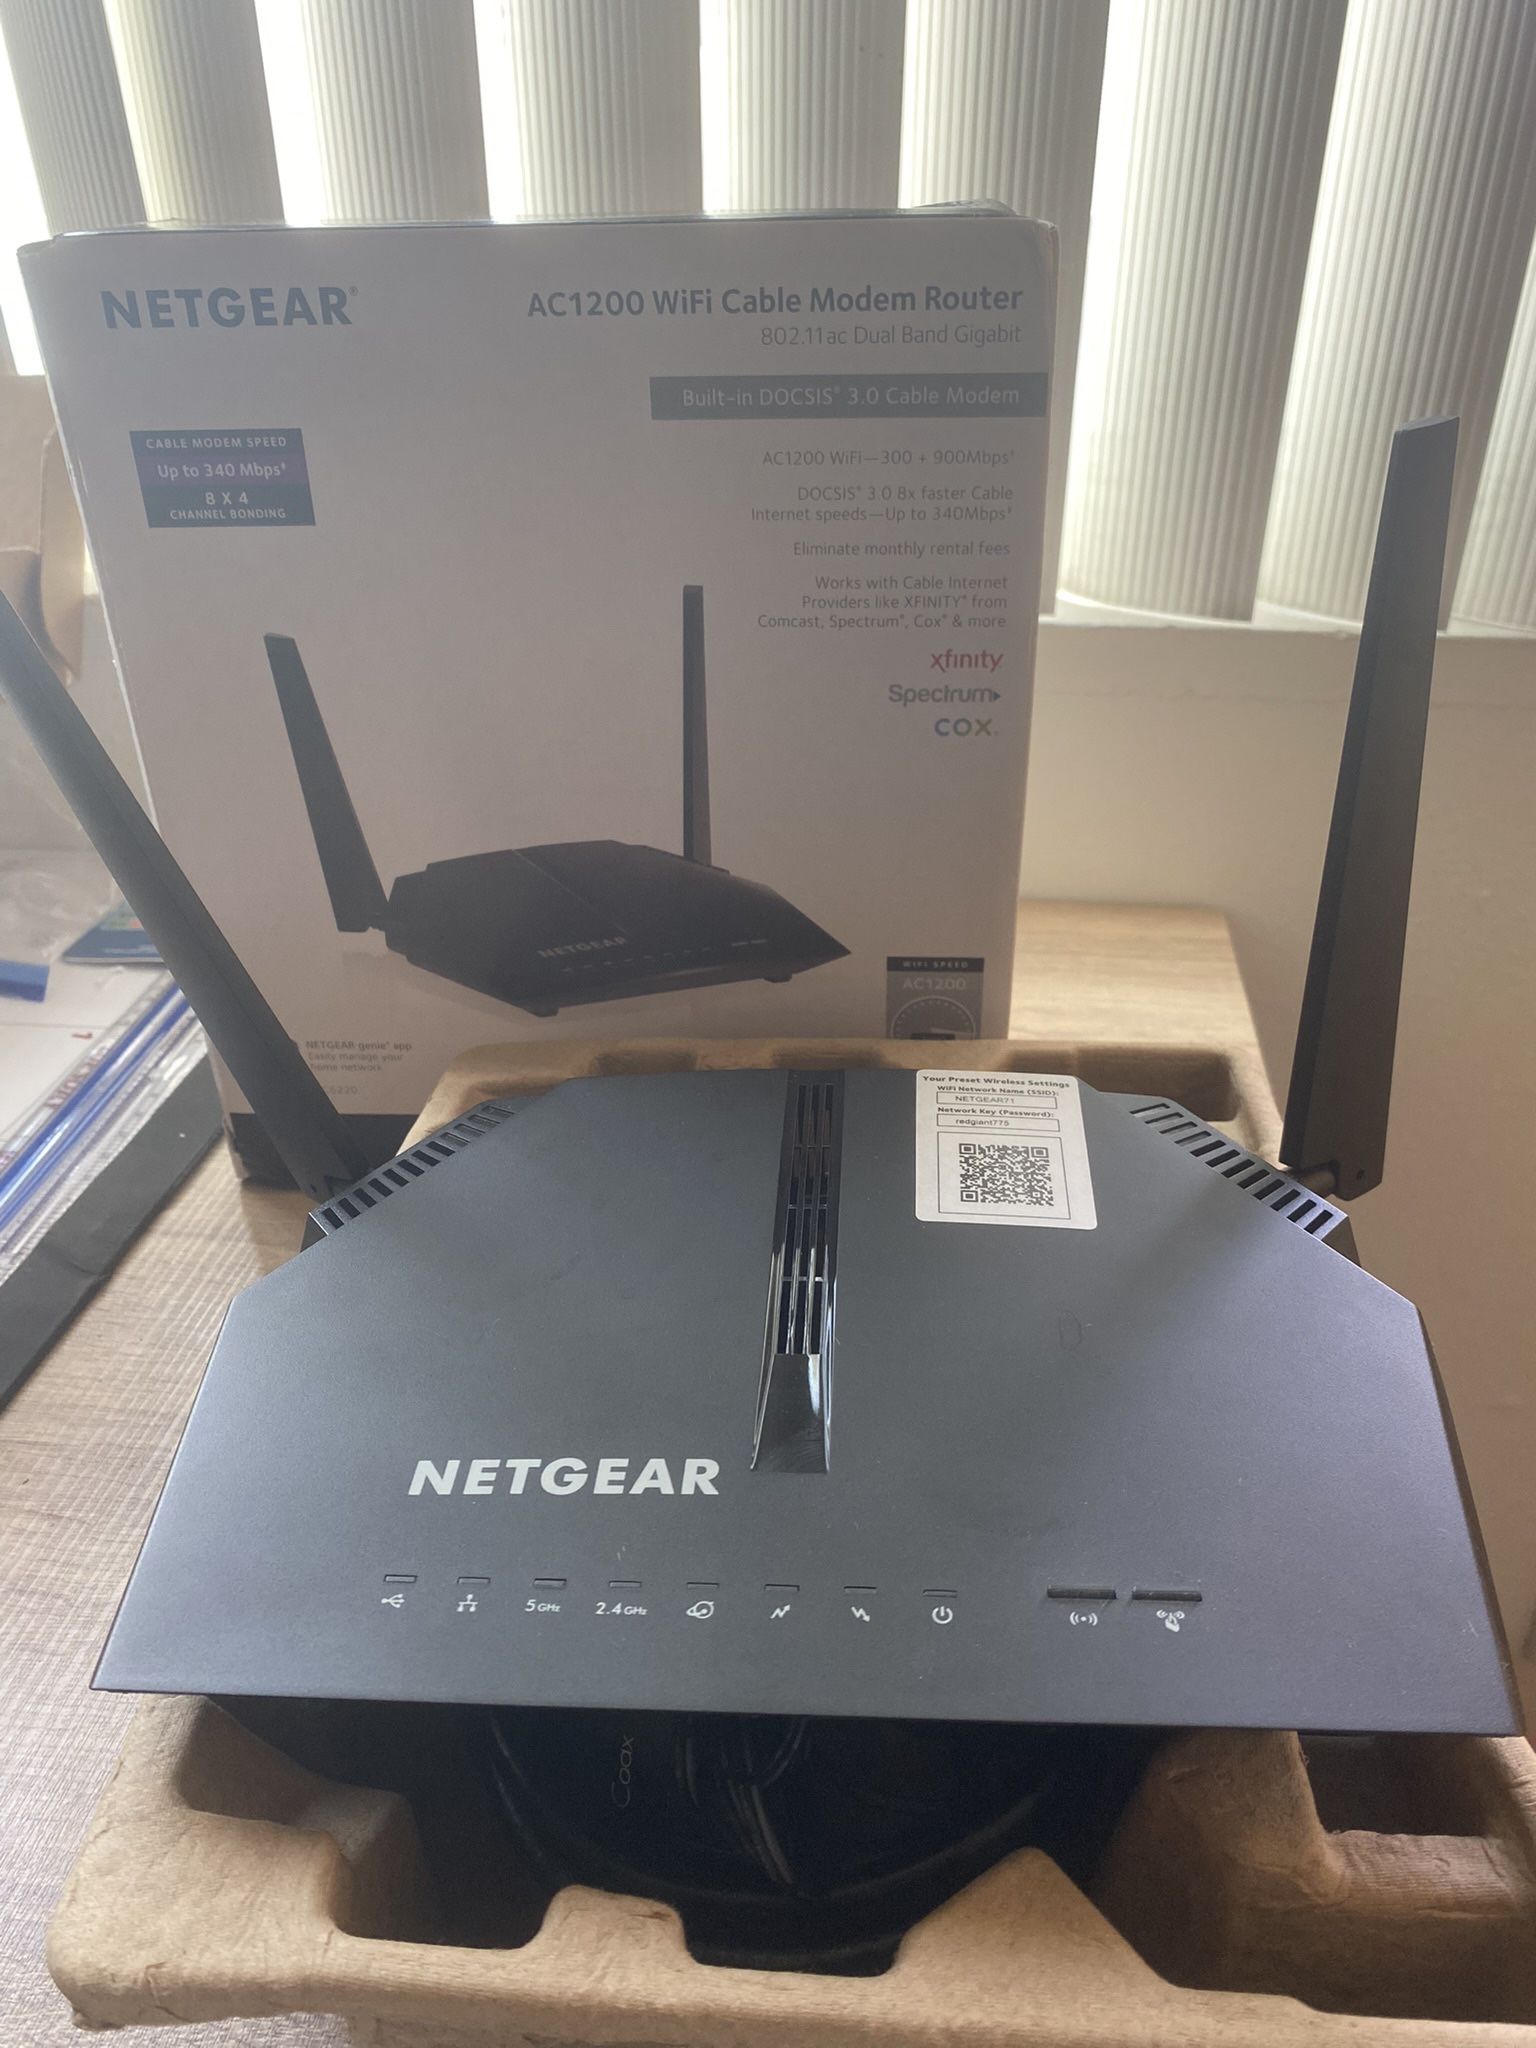 NETGEAR Cable Modem WiFi Router Combo C6220